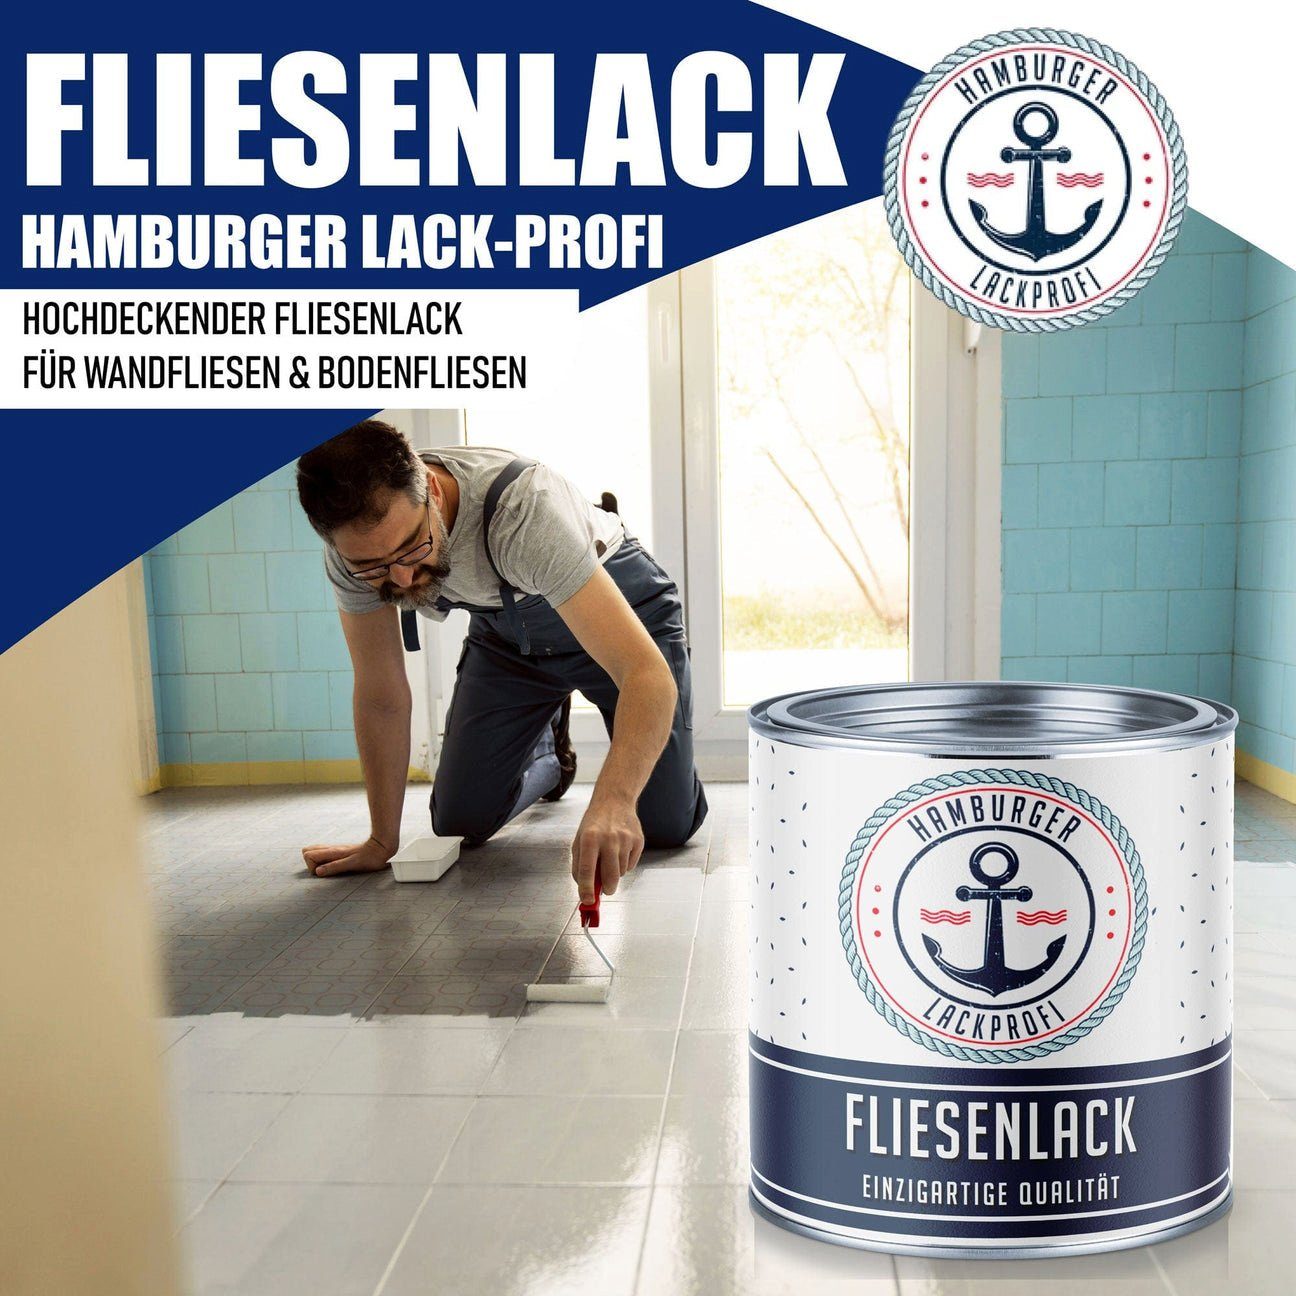 Hamburger Lack-Profi Fliesenlack